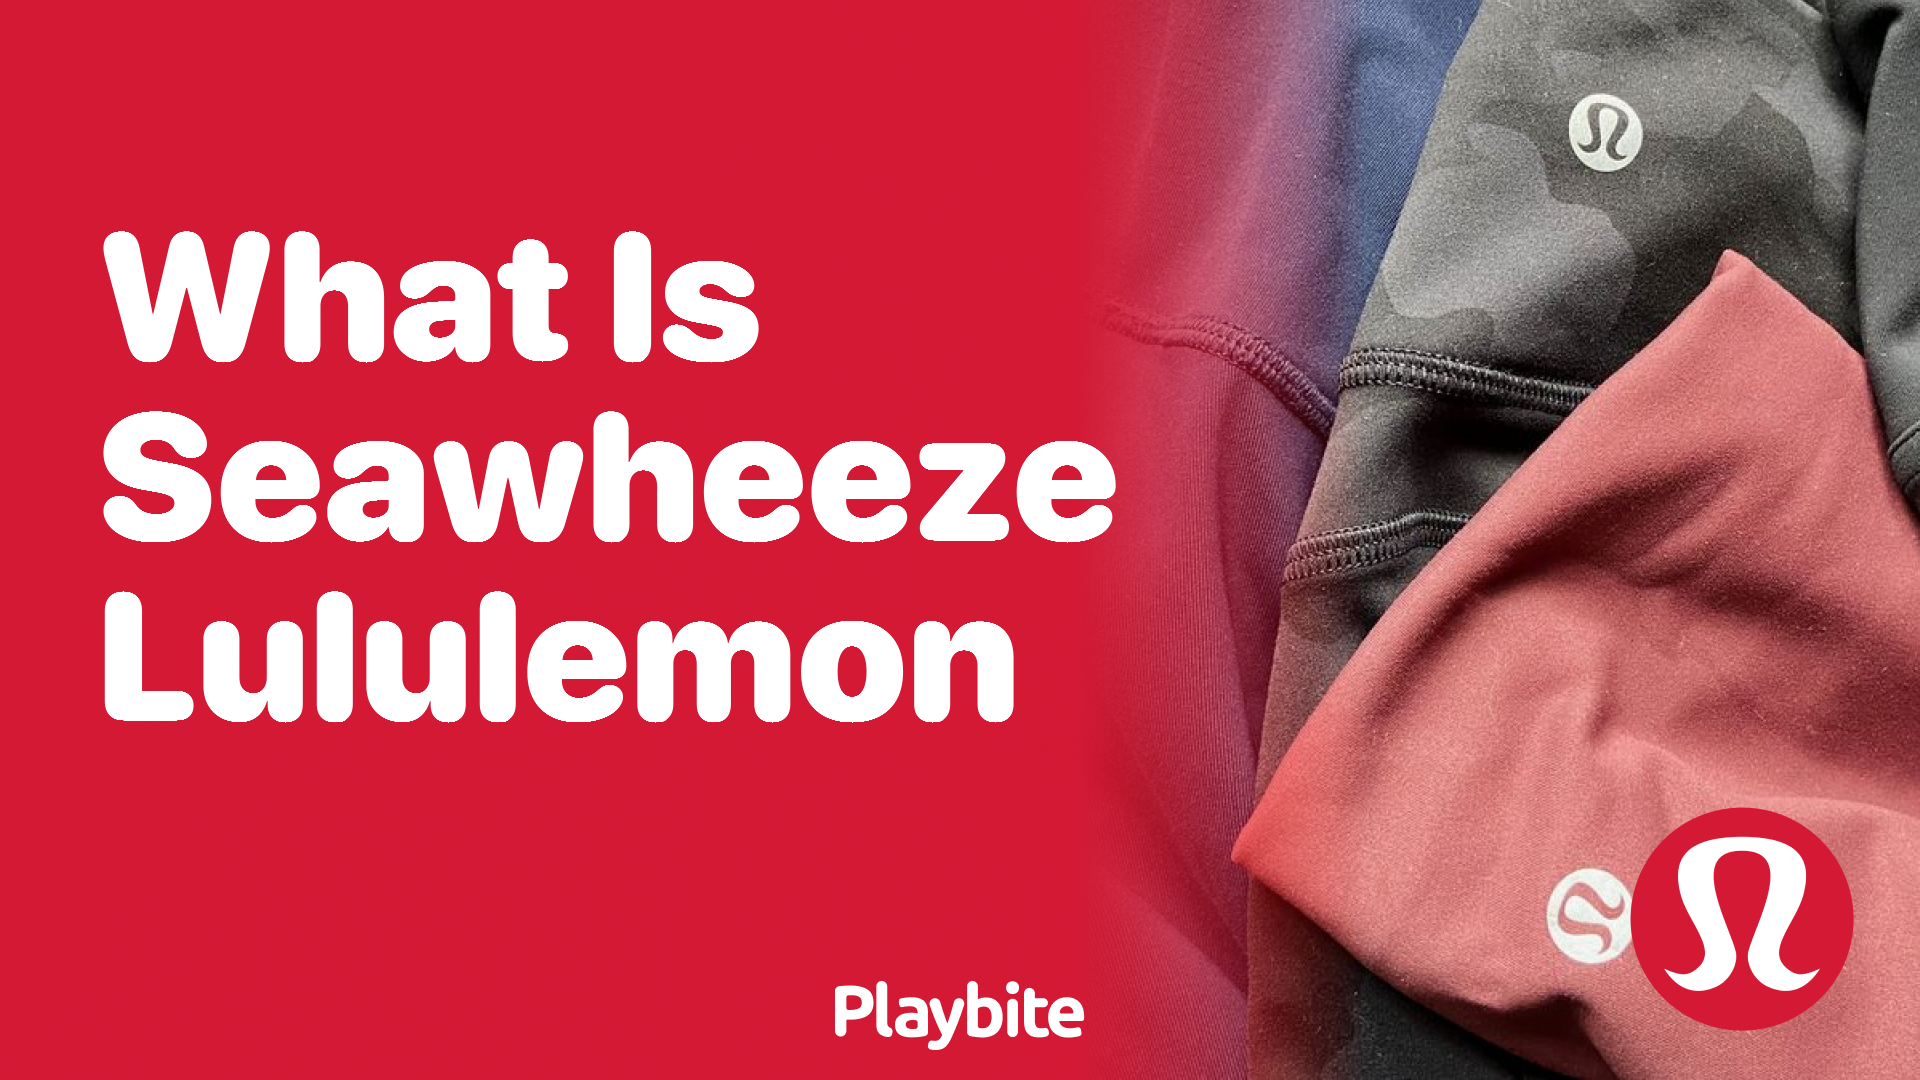 What is SeaWheeze Lululemon? - Playbite